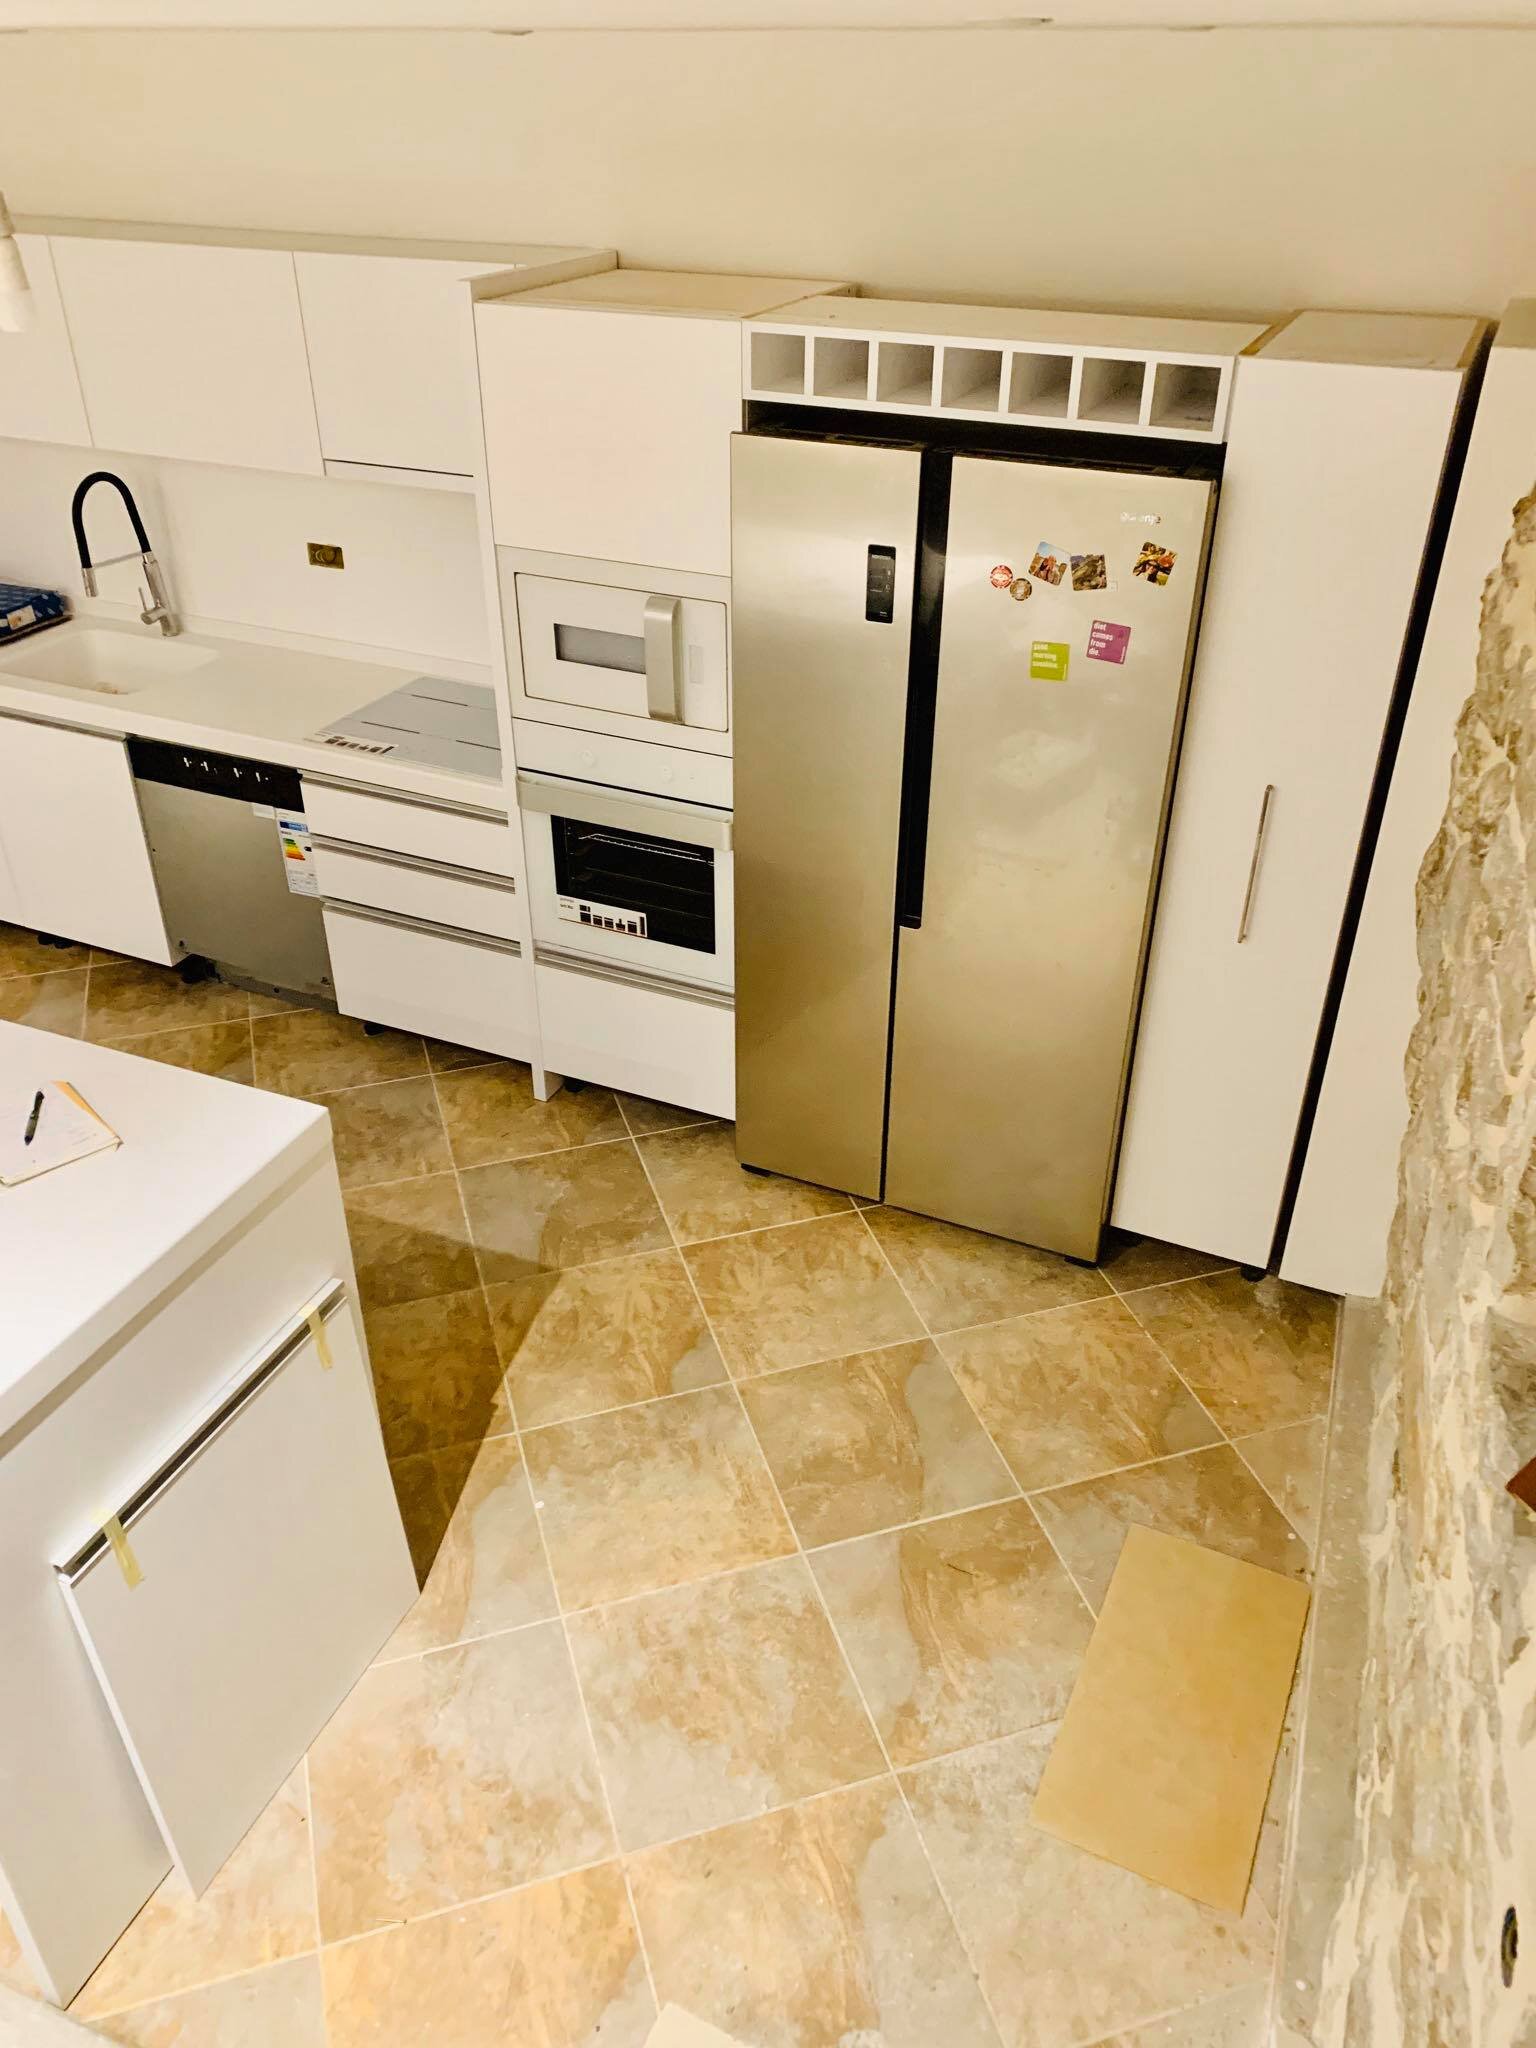 Kitchen Update - Montenegro Stone House Renovation Journey (Day 119)3.jpg